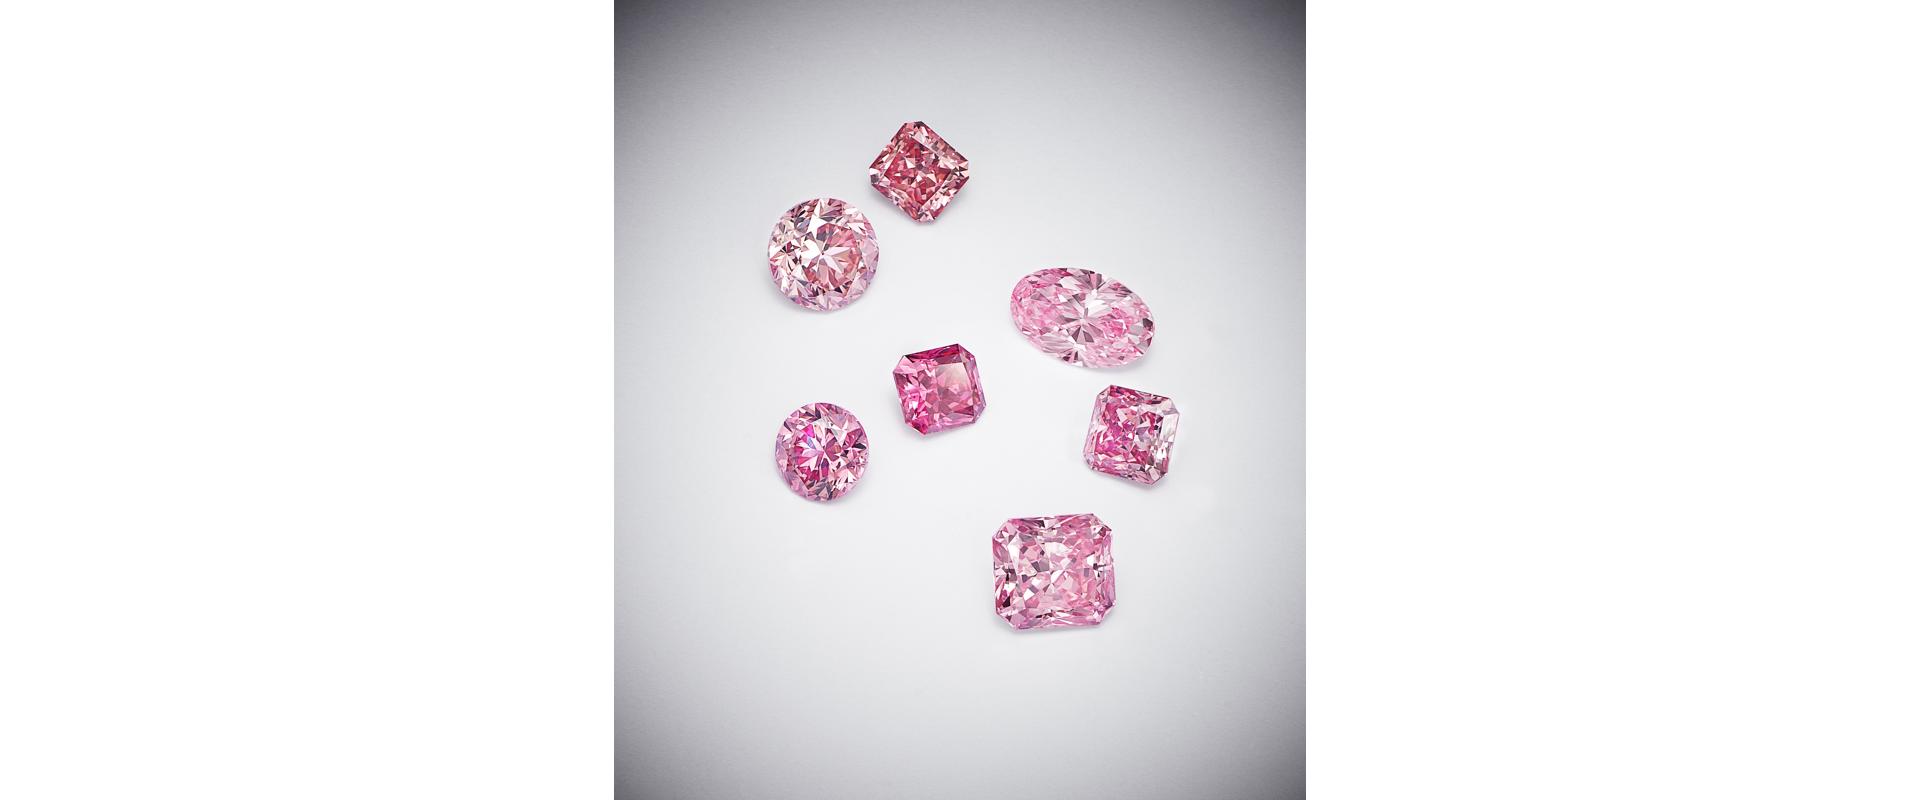 Pink Diamonds - Capsule collection of rare natural pink diamonds